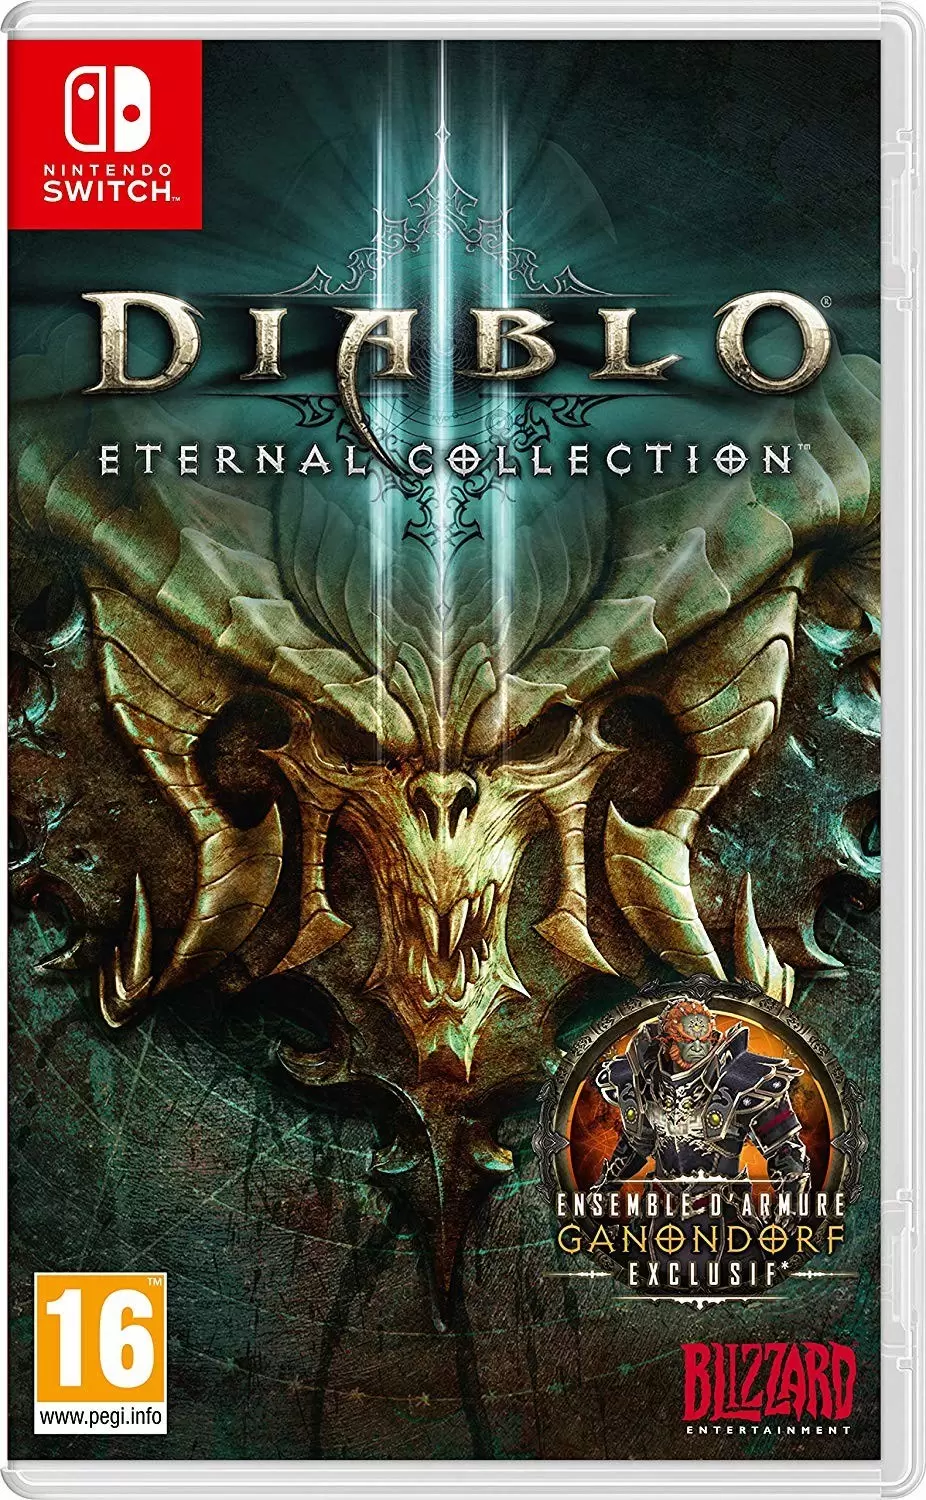 Nintendo Switch Games - Diablo 3 Eternal Collection